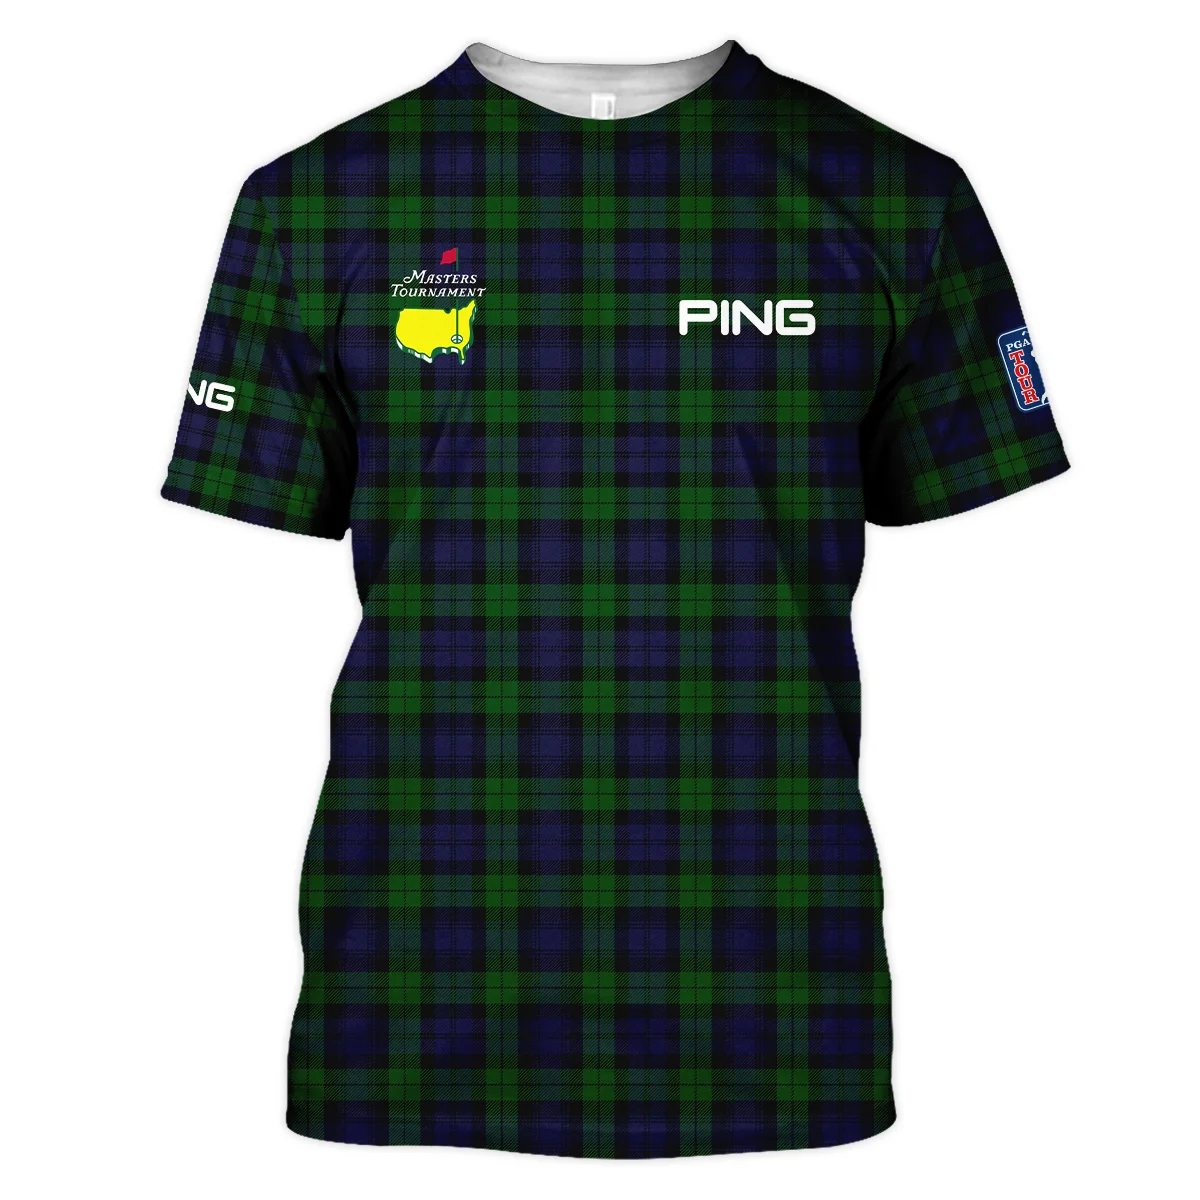 Masters Tournament Ping Golf Long Polo Shirt Sports Green Purple Black Watch Tartan Plaid All Over Print Long Polo Shirt For Men